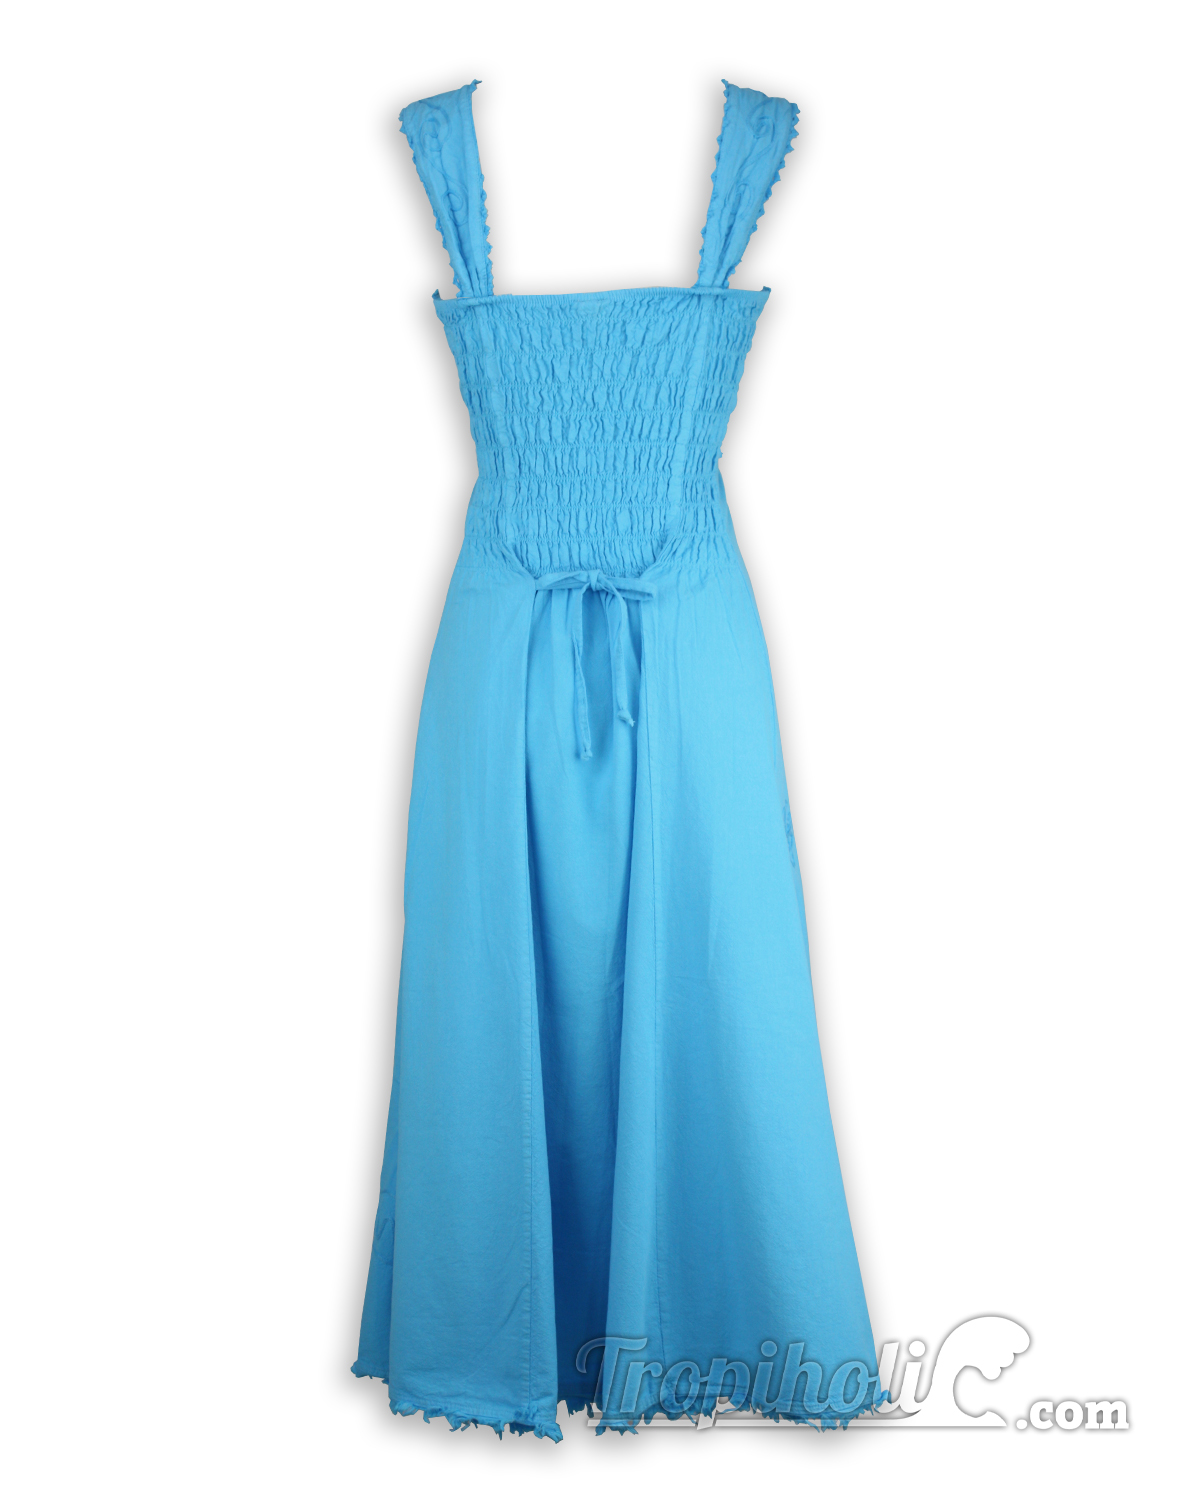 Tropical Sun Dress – Caribbean Beauty Turquoise Back view